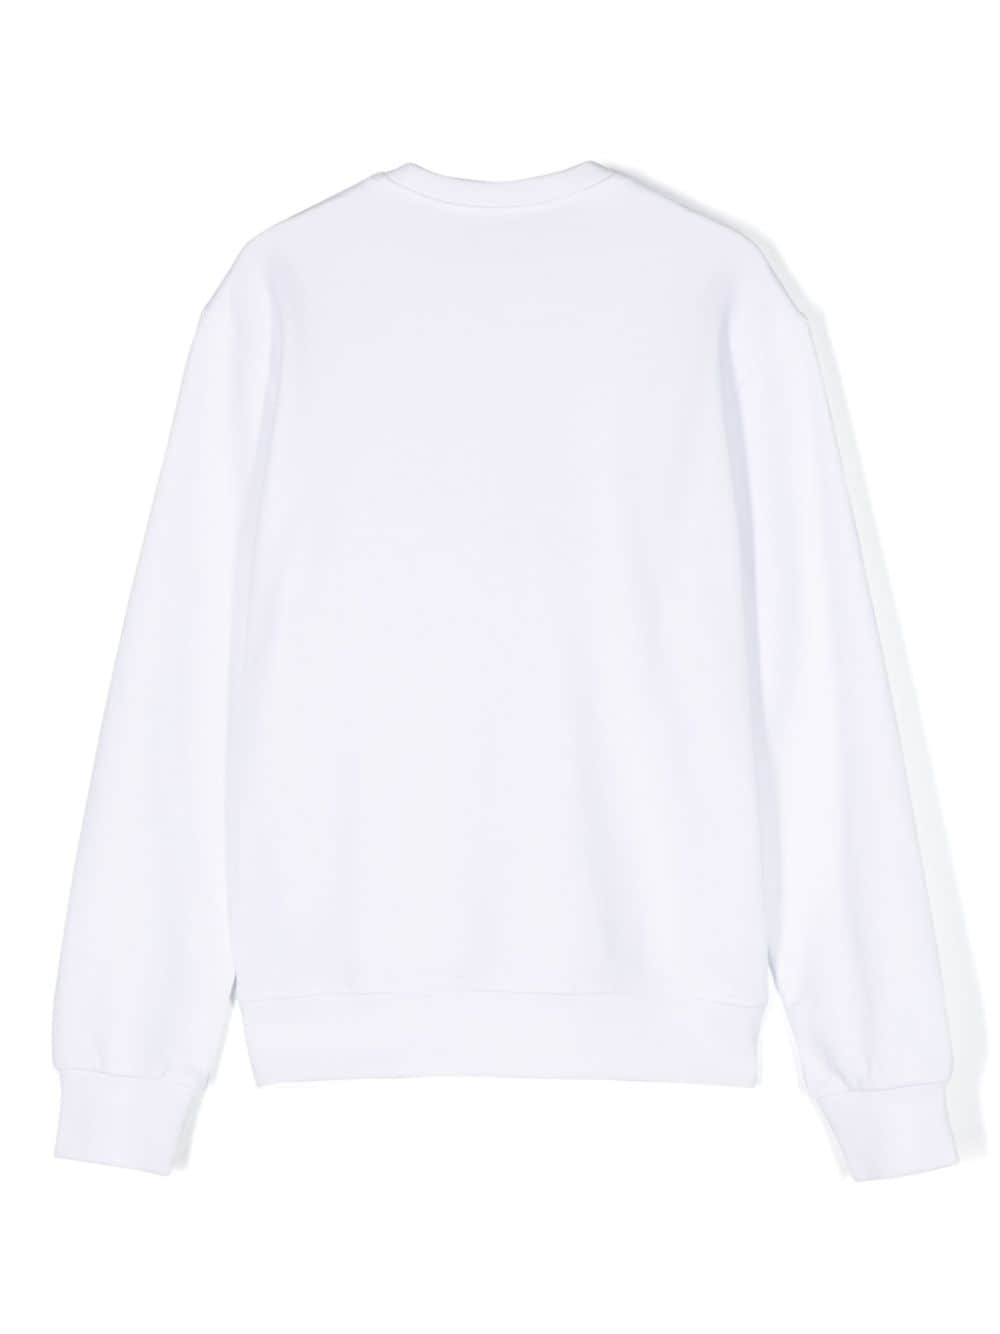 White sweatshirt for boys with ICON print